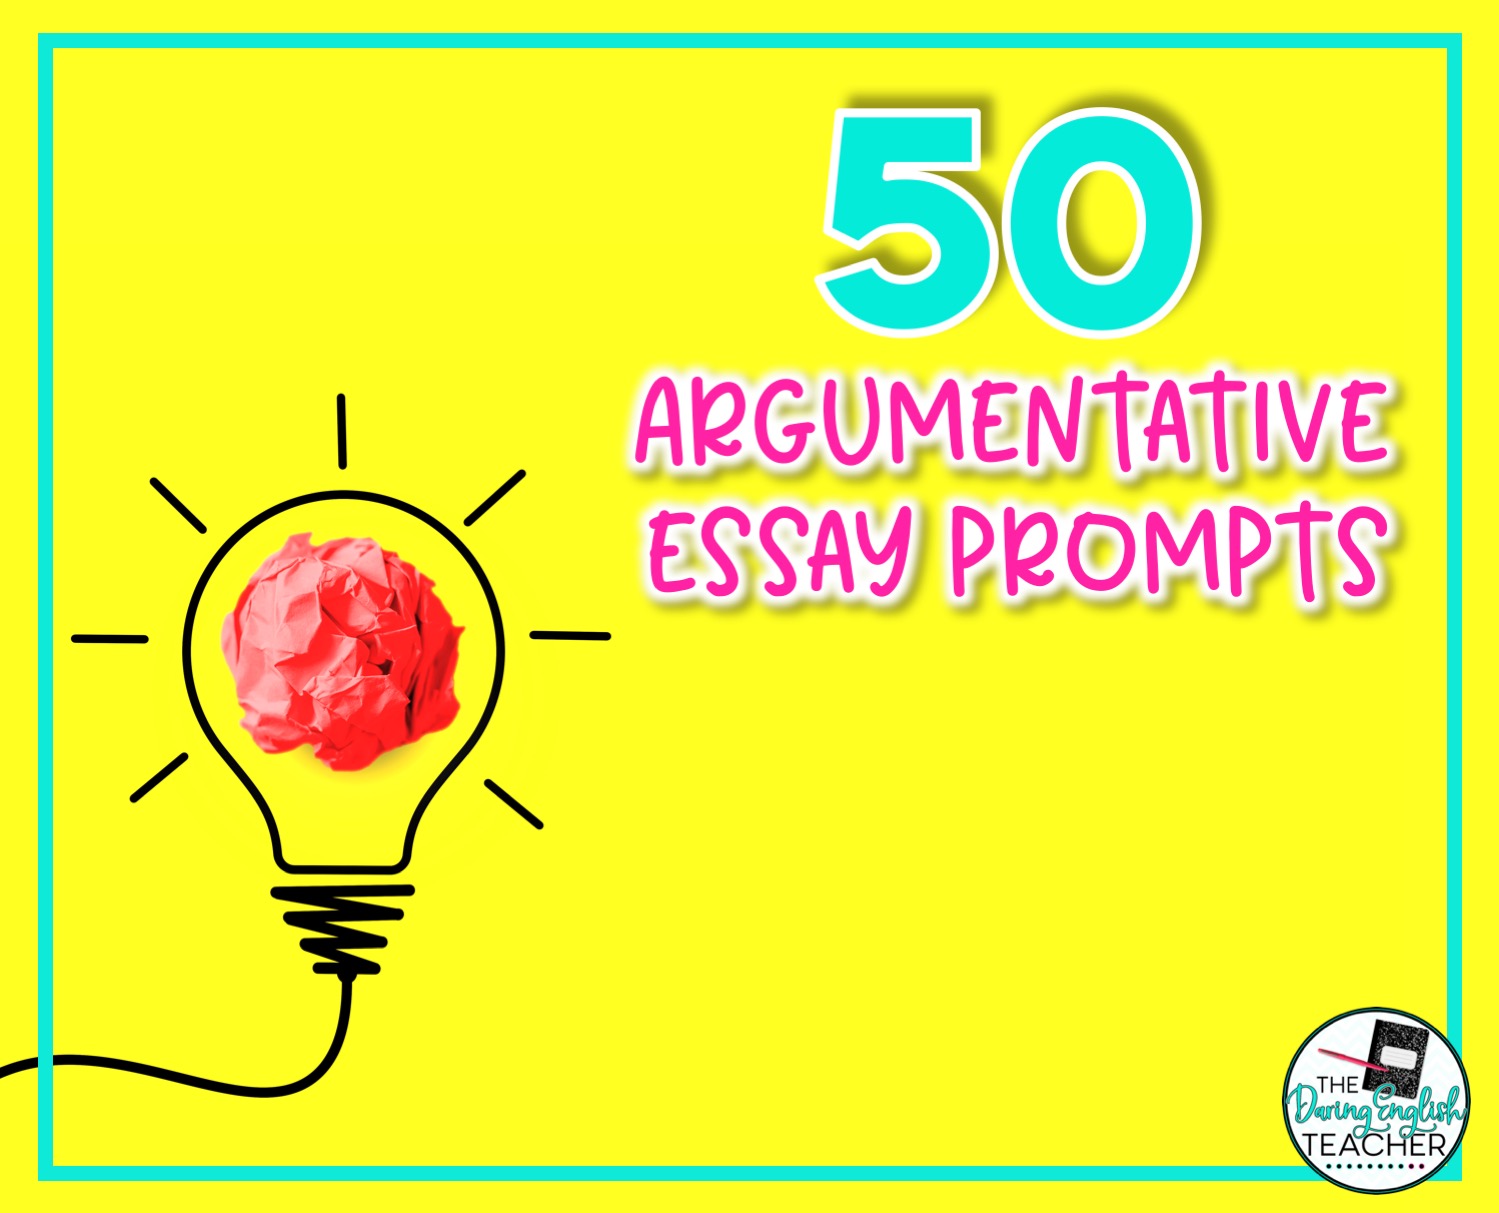 Argumentative essay prompts - 50 argument essay prompts to choose from